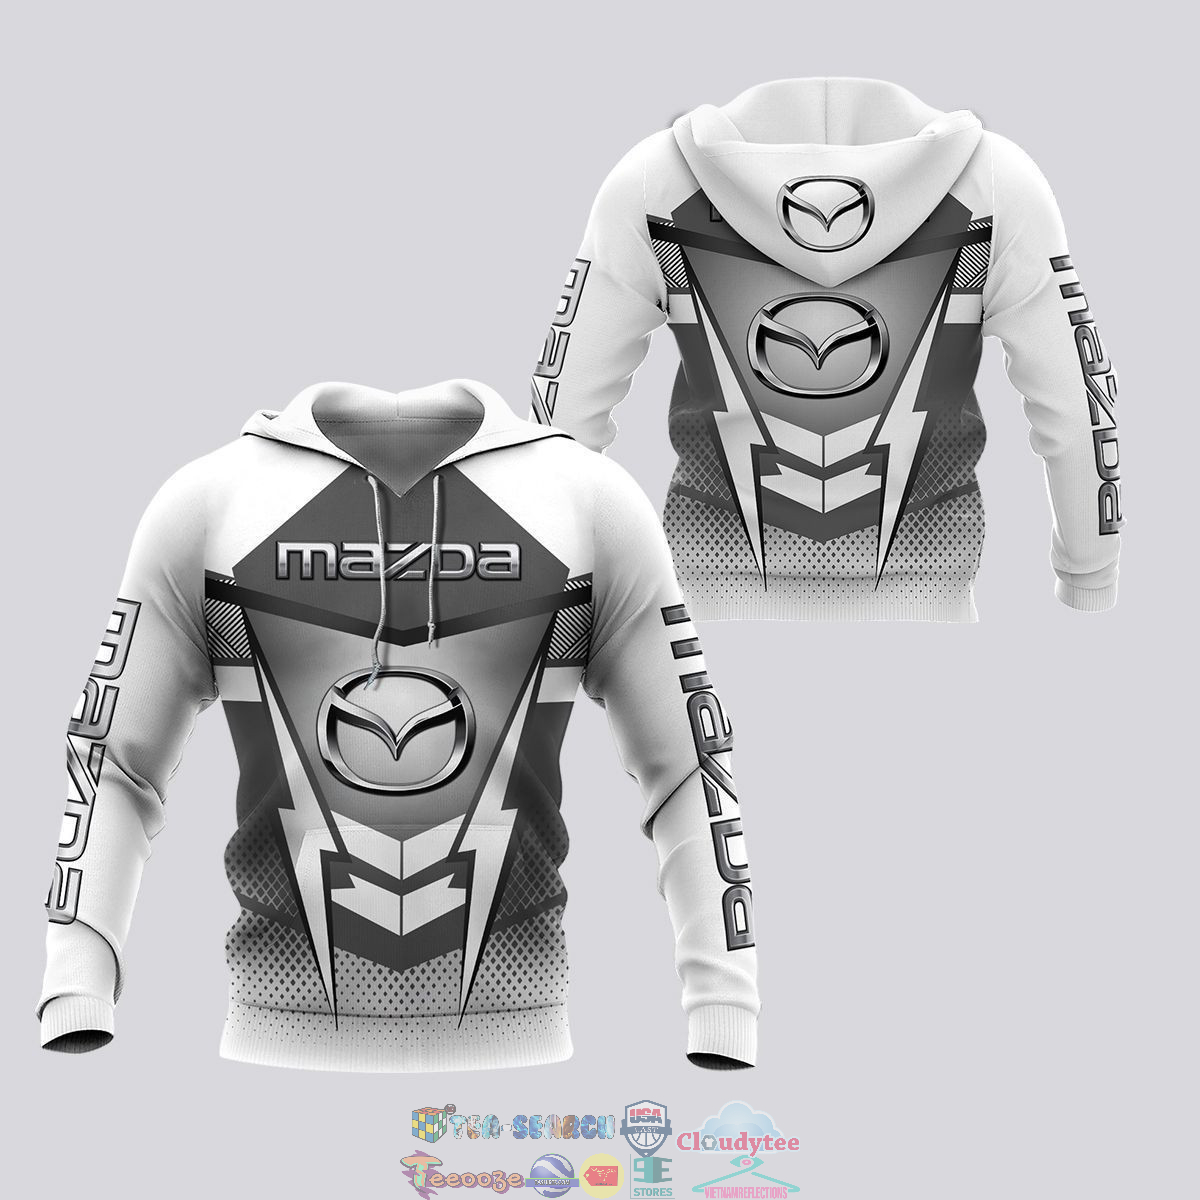 Mazda ver 11 3D hoodie and t-shirt – Saleoff